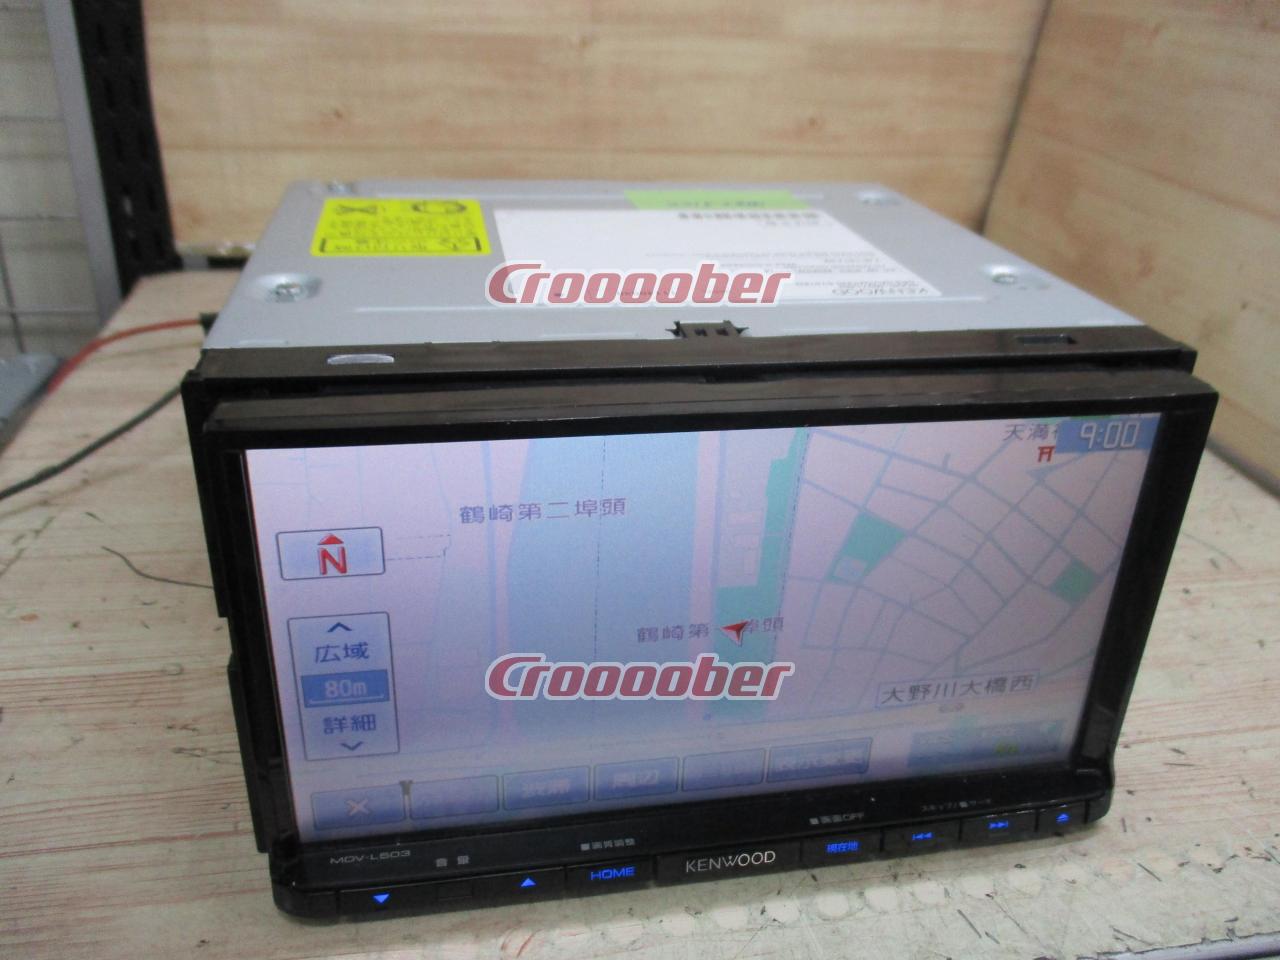 KENWOOD MDV-L503 | Memory Navigation(digital) | Croooober